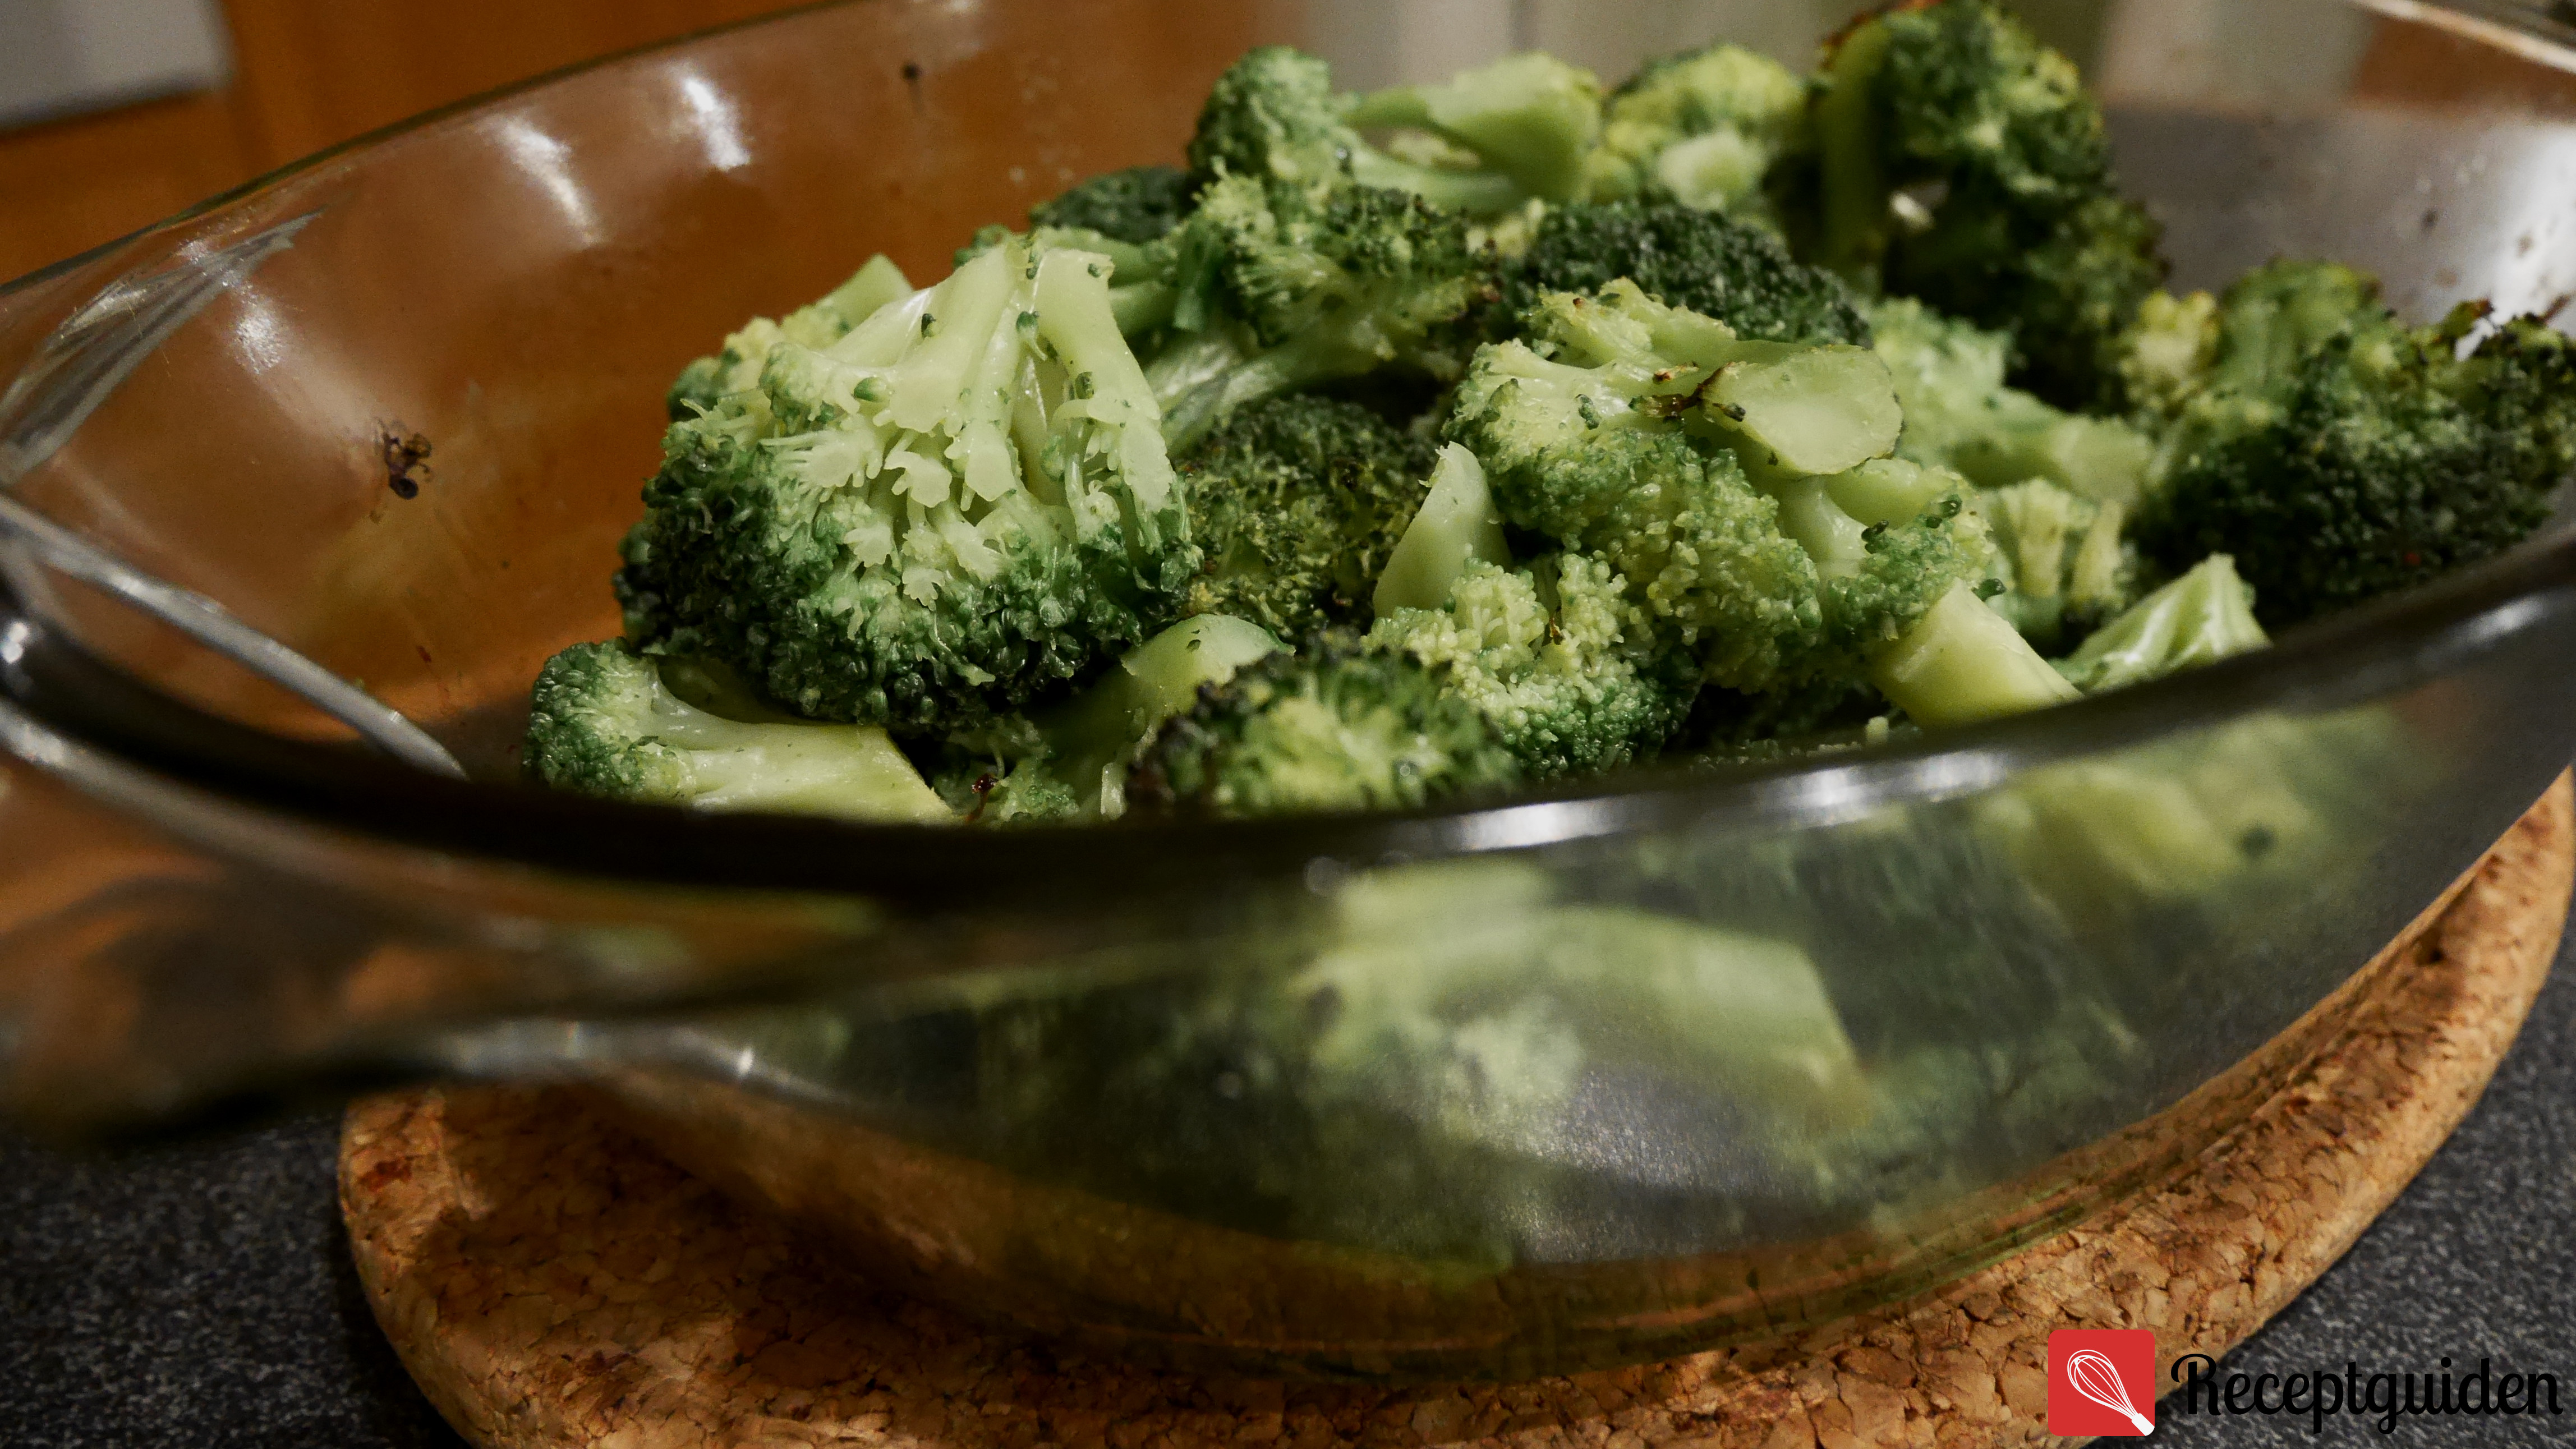 Rostad broccoli